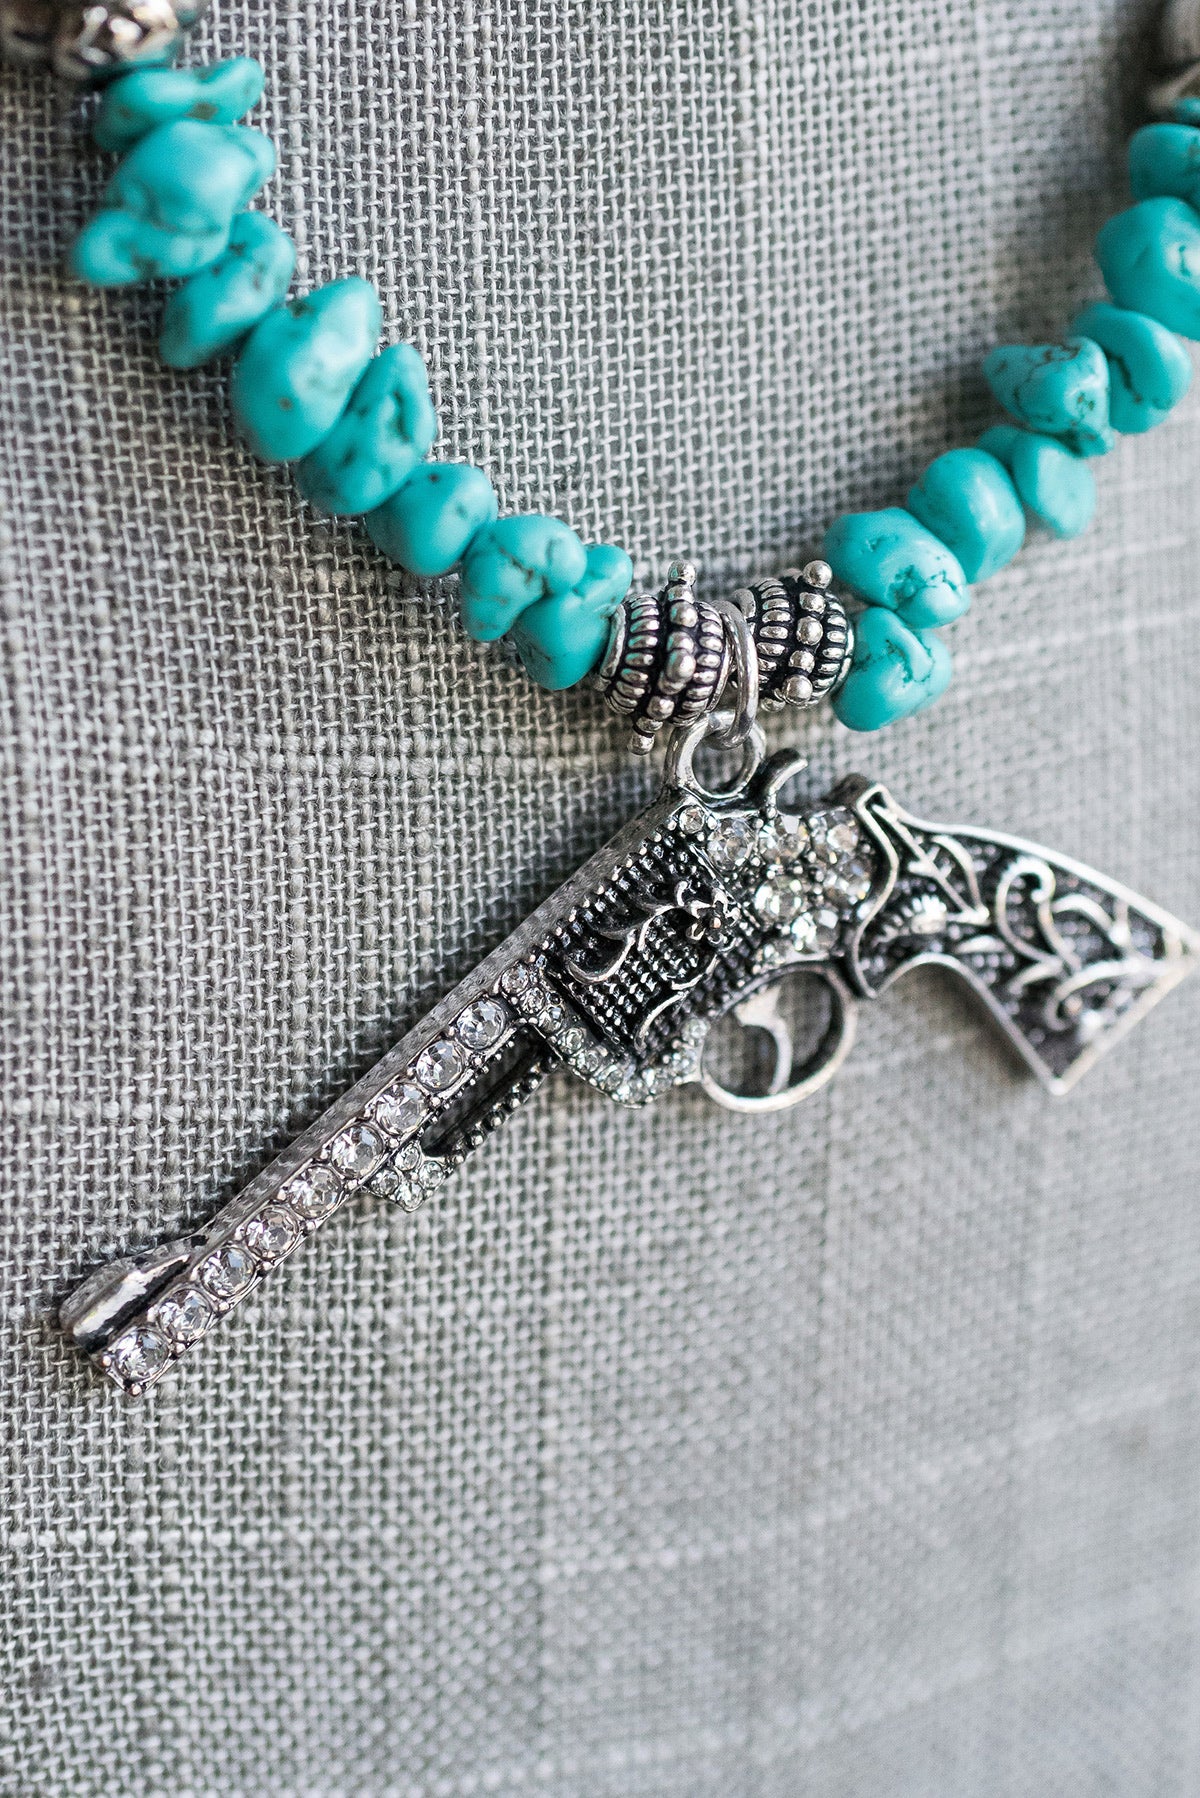 Turquoise Beaded Necklace with Rhinestone Pistol Pendant